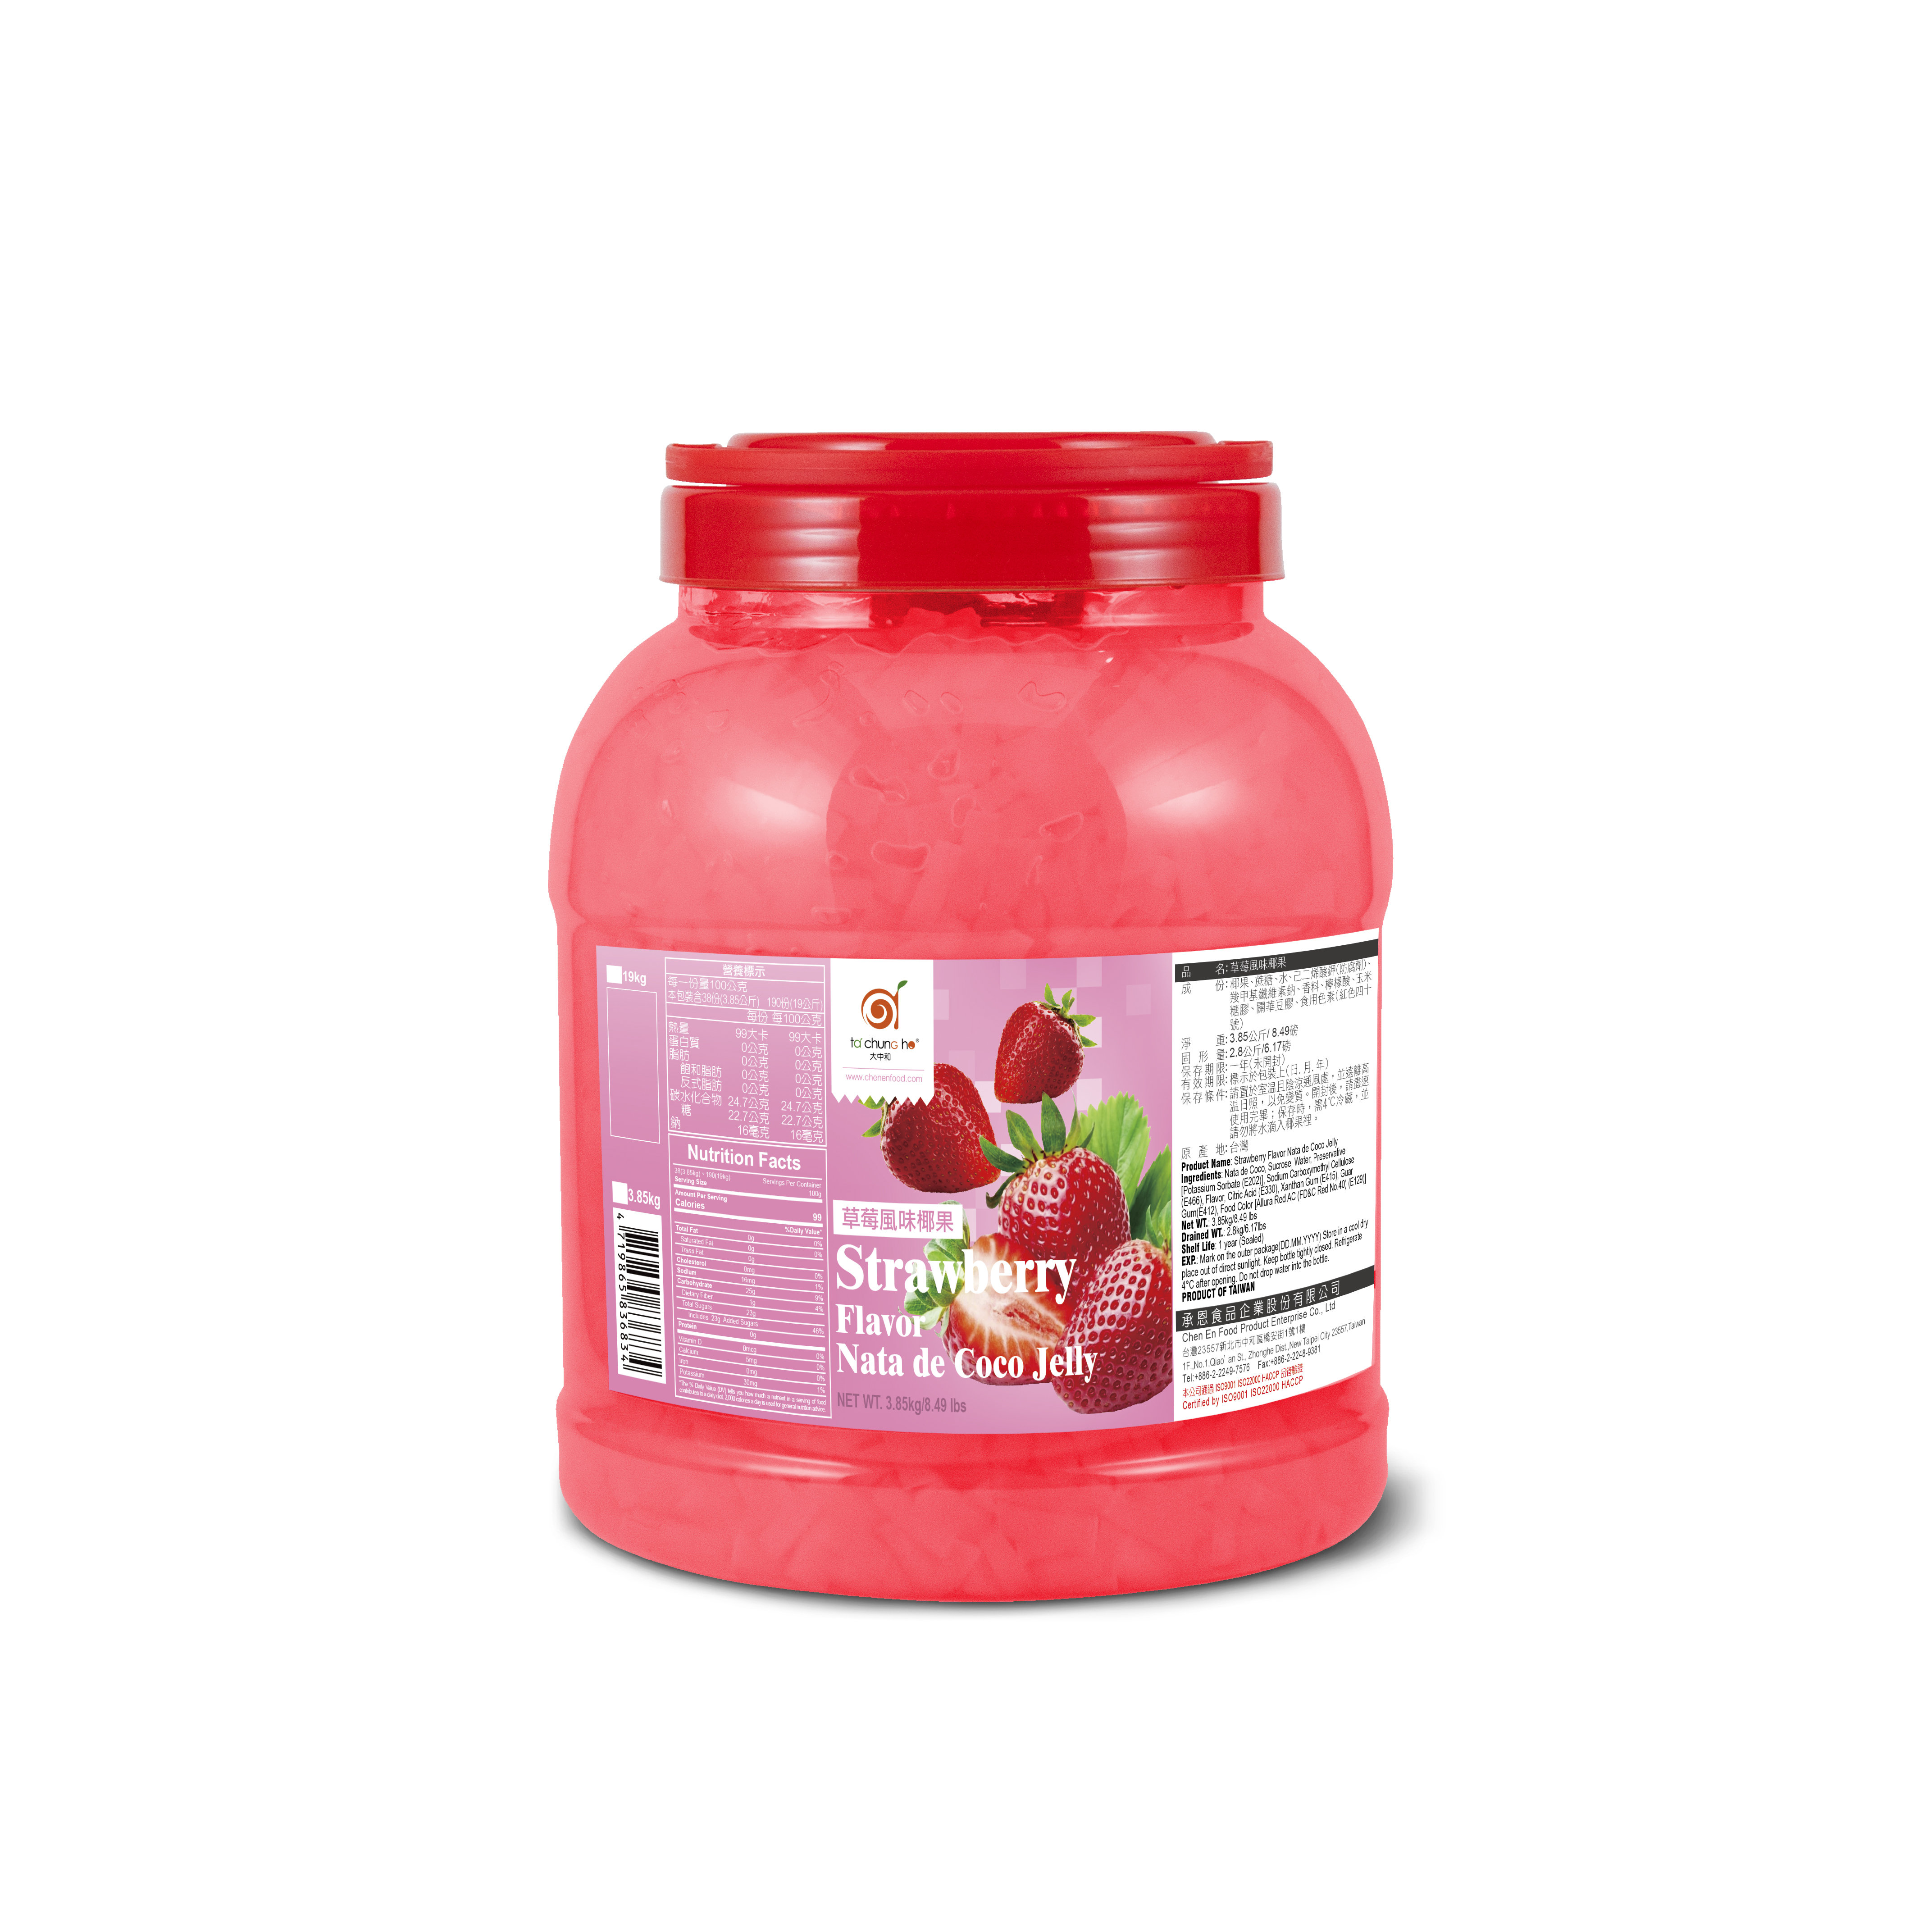 Strawberry Flavor Nata de Coco Jelly Package (export) 